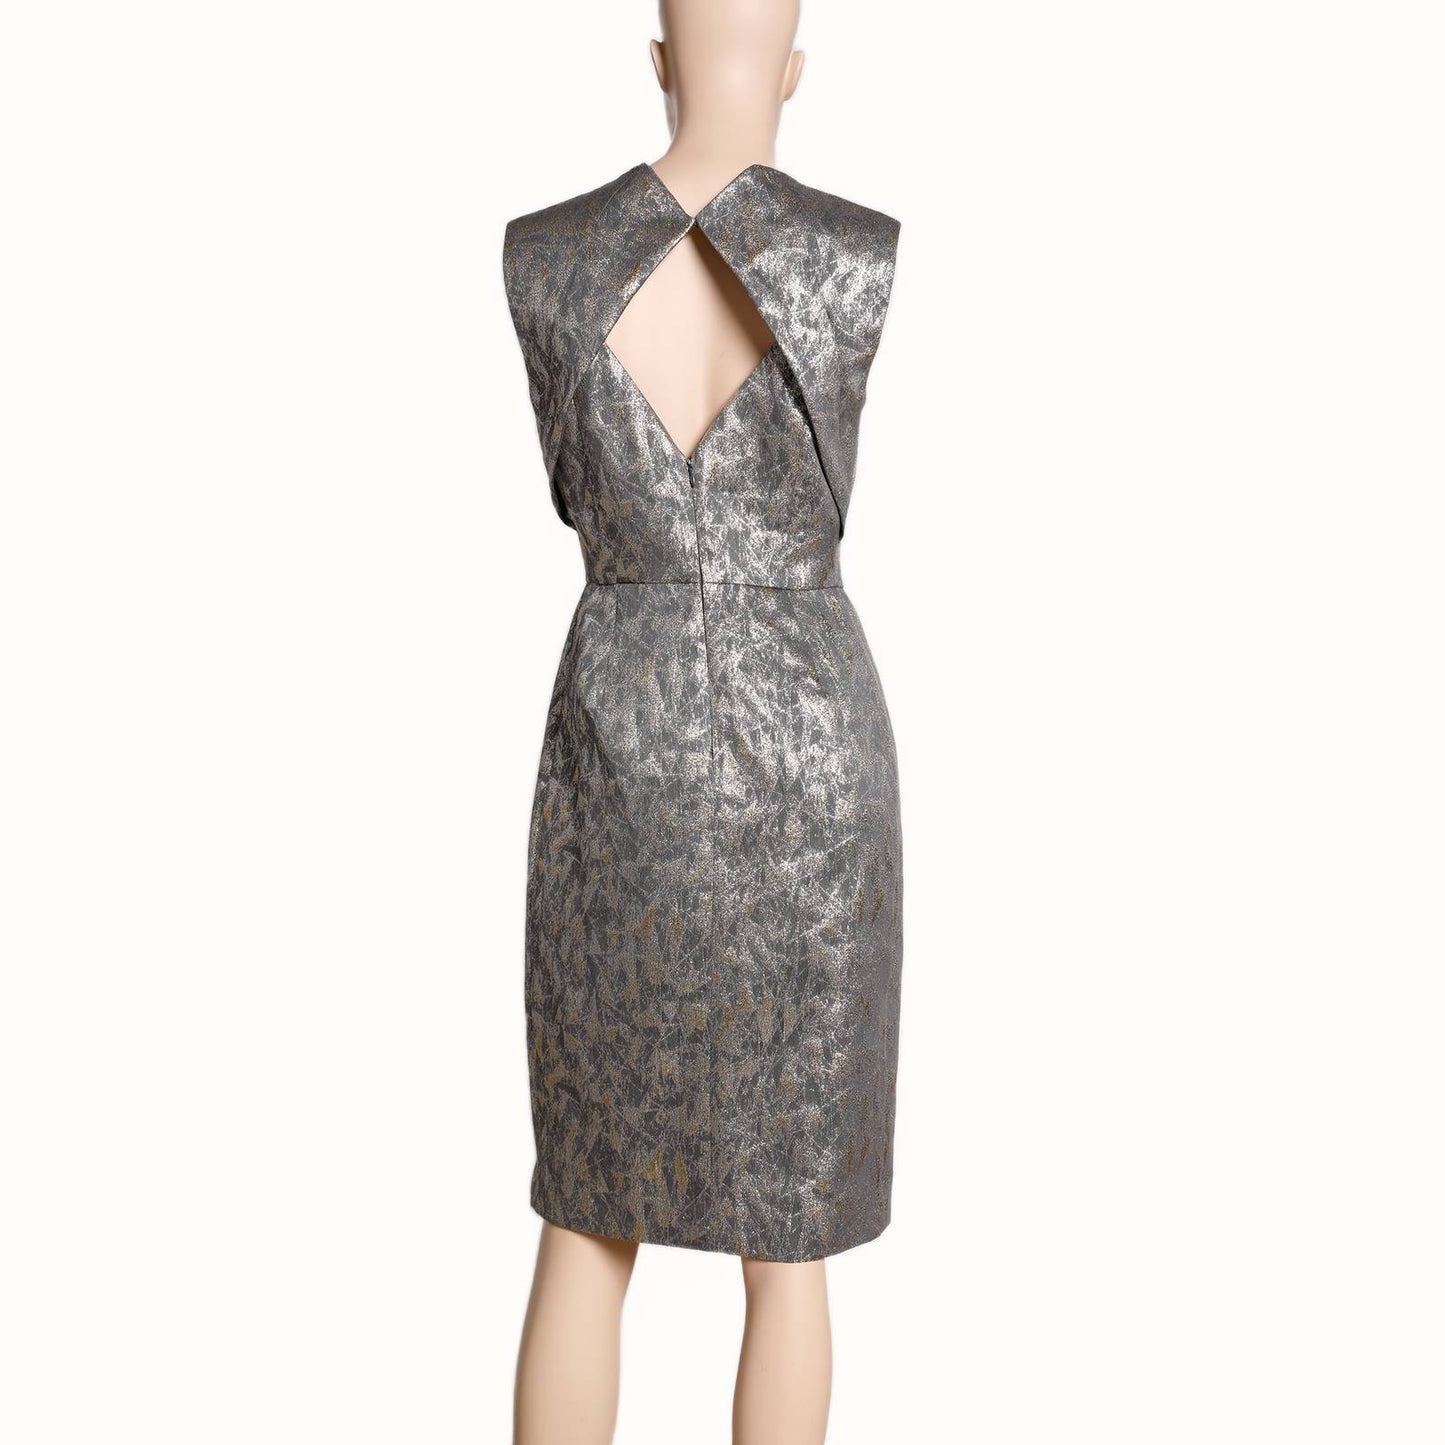 TIA CIBANI Gray and Gold Metallic Printed Sleeveless Dress